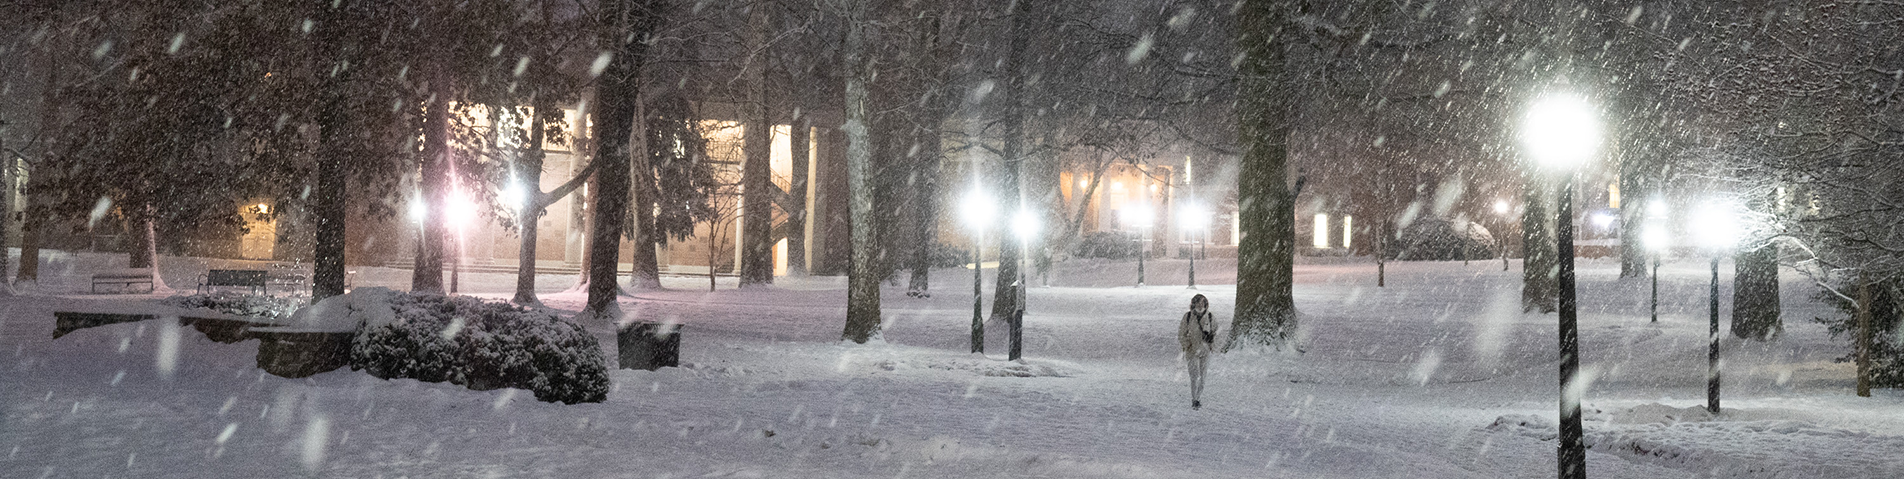 campus in a snowy night